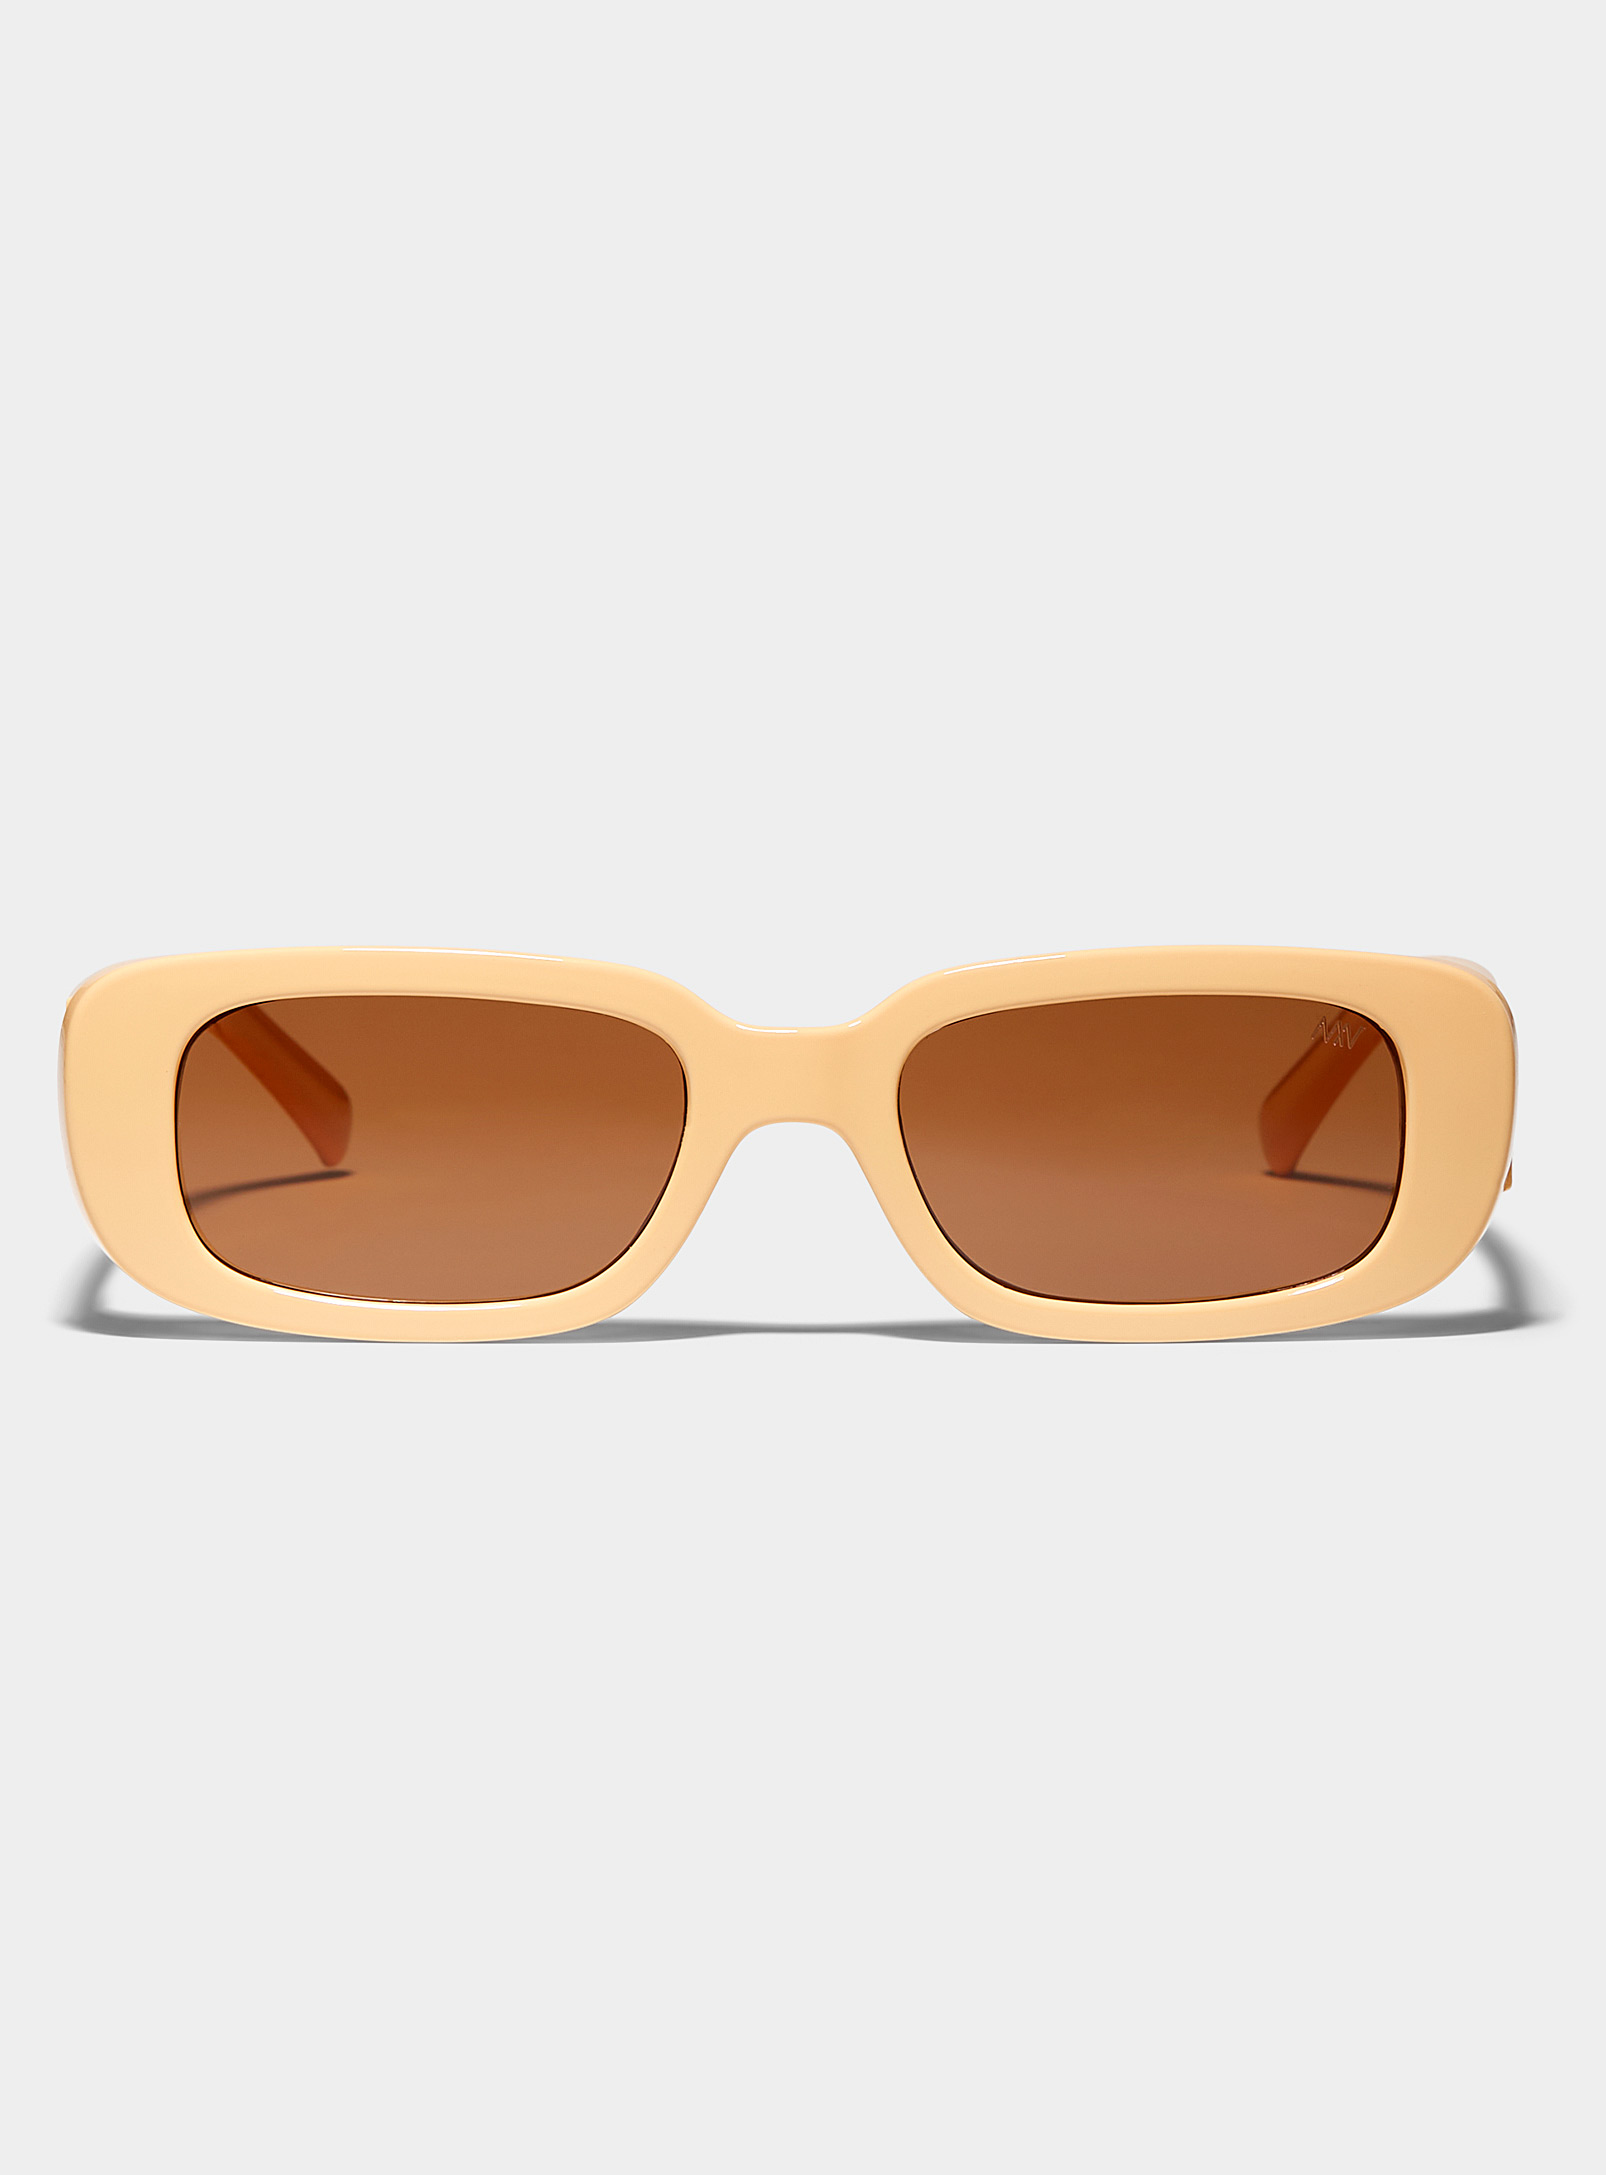 Matt & Nat - Men's Kiin rectangular sunglasses